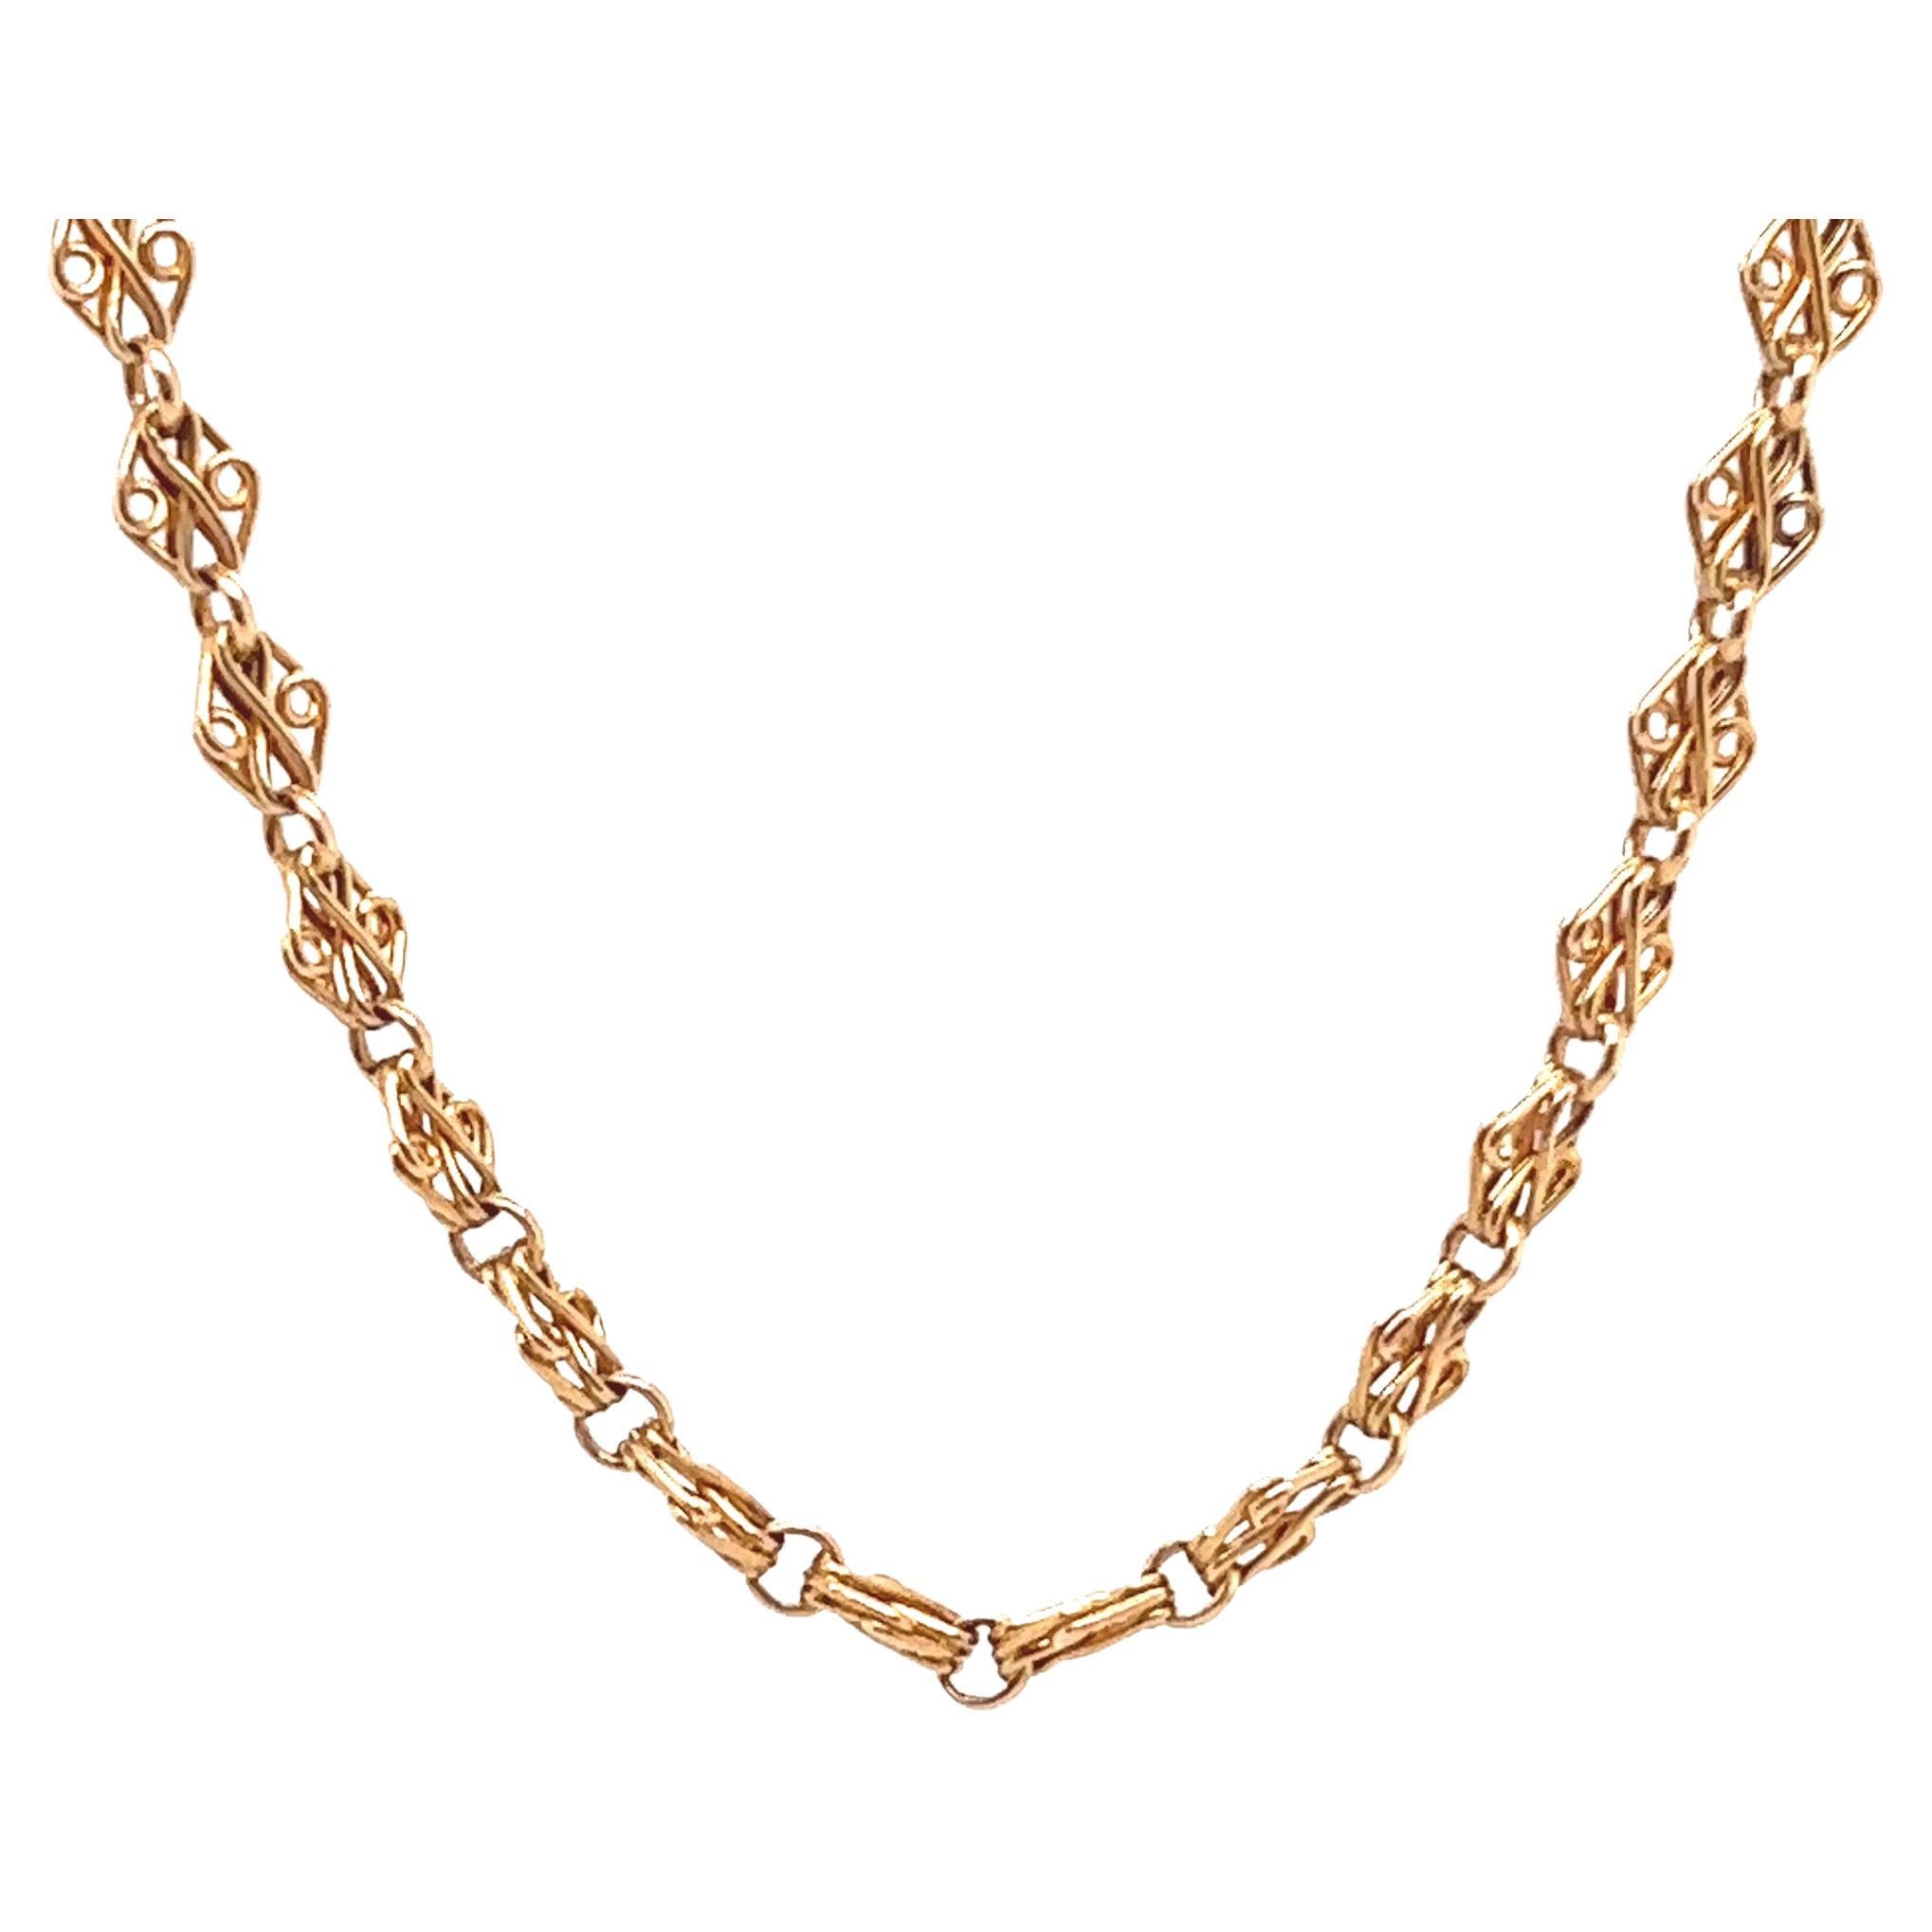 Antique French 18 Karat Gold Fancy Link Necklace